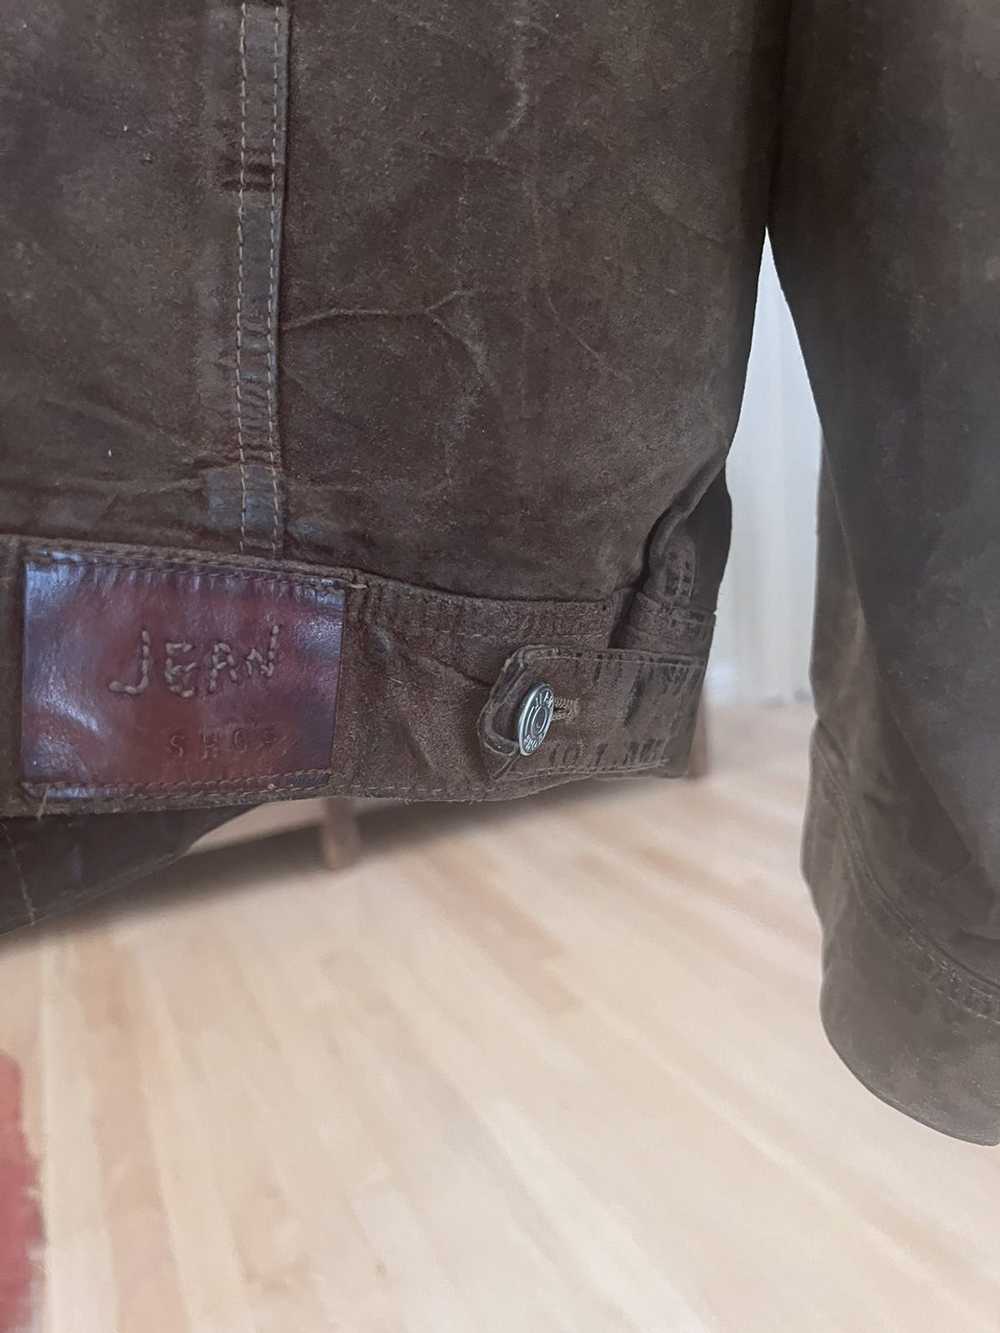 Jean Shop Brown Suede Leather “Jean” Jacket - image 4